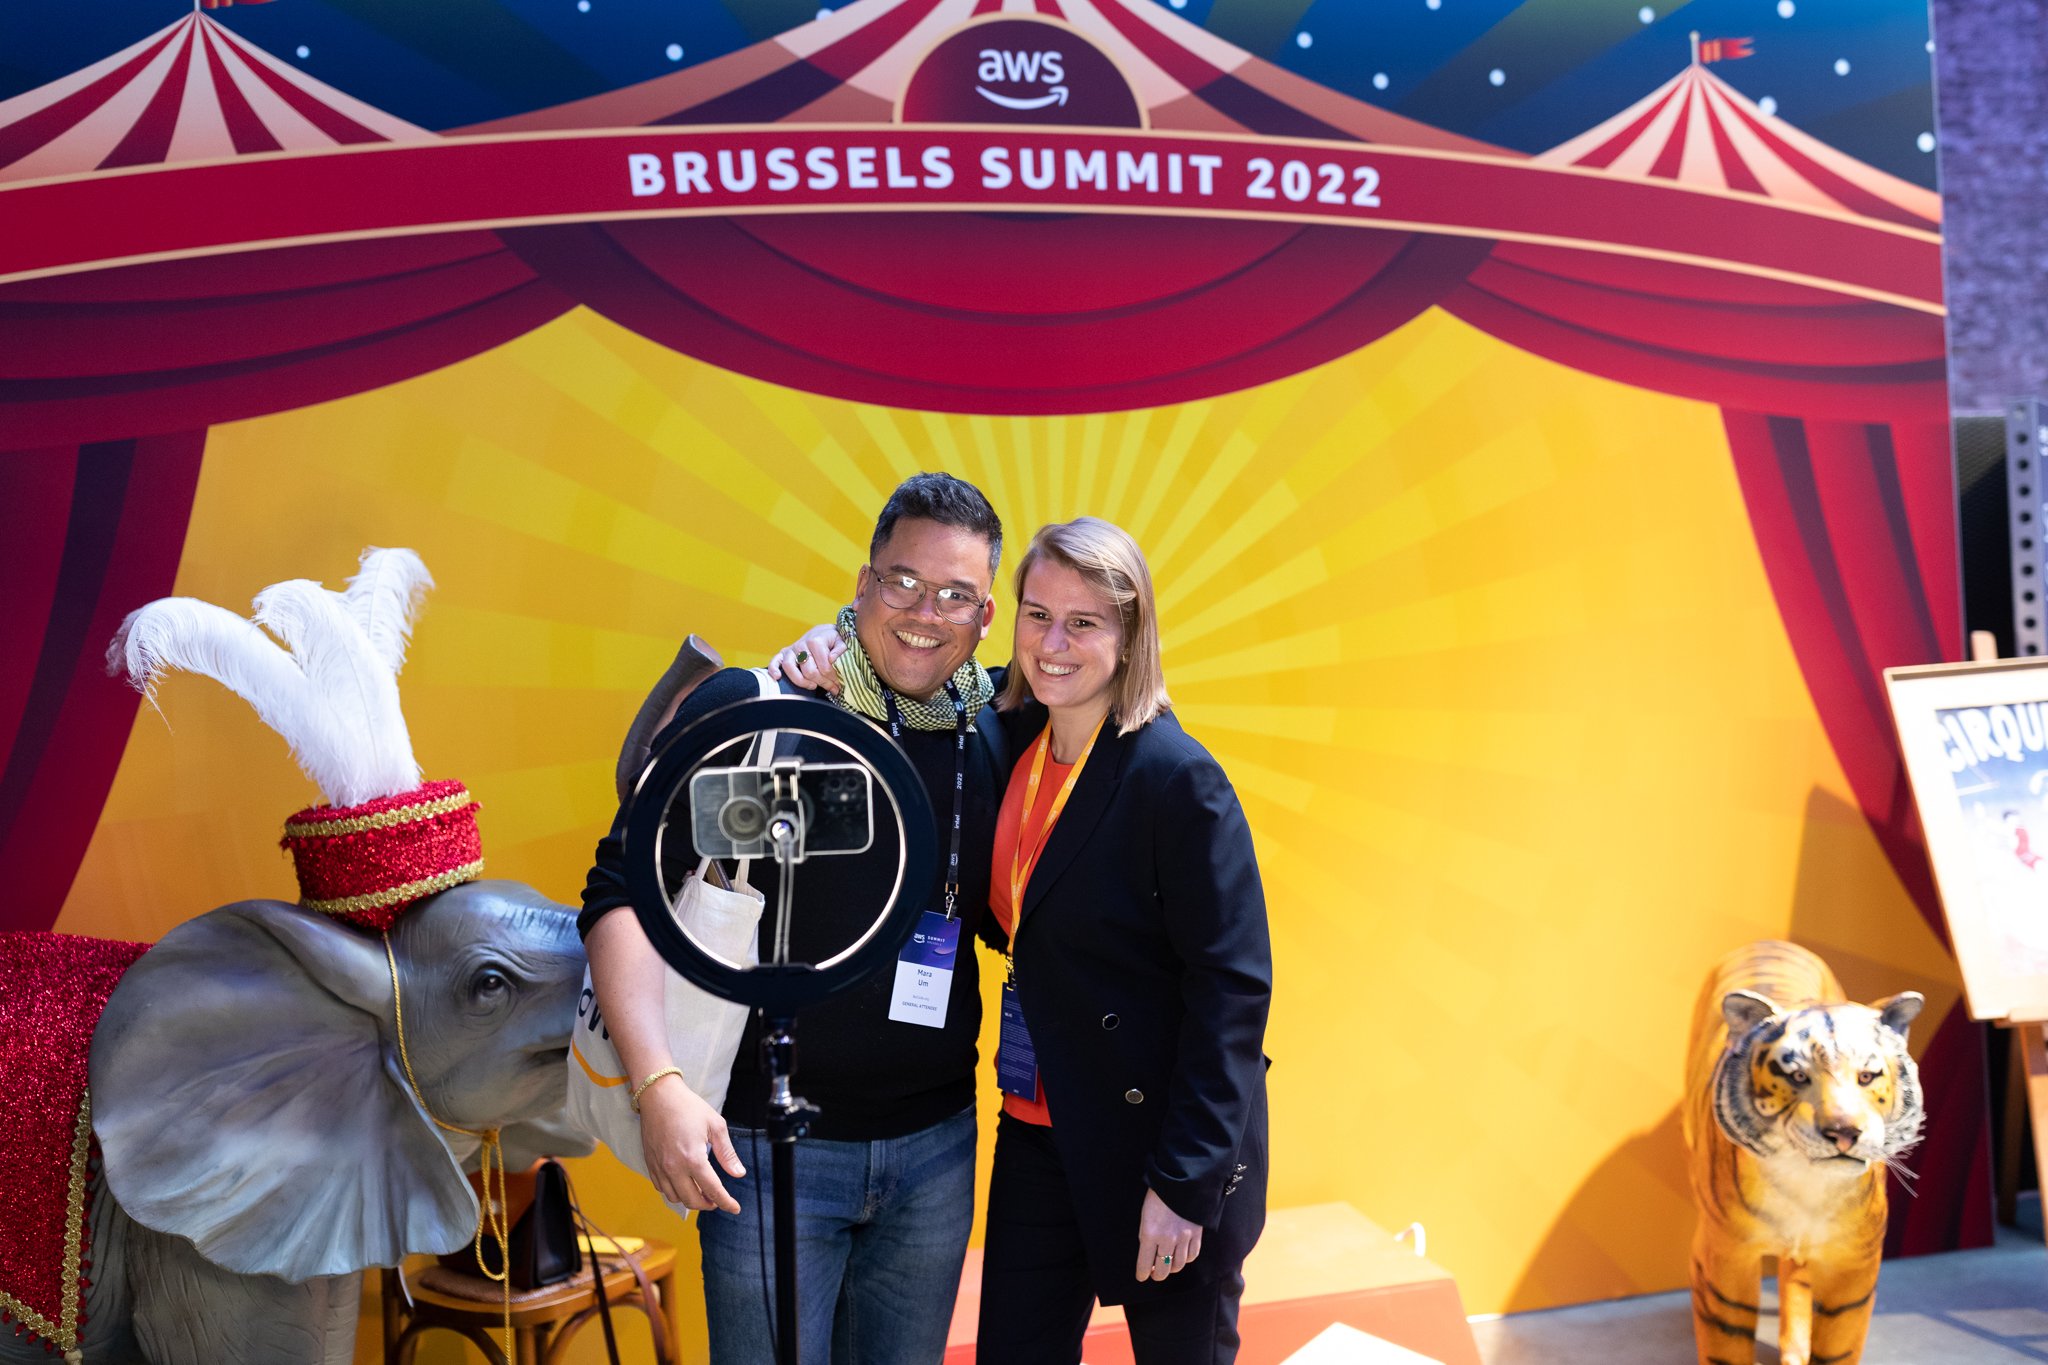 AWS summit 2022 Brussels406.jpg